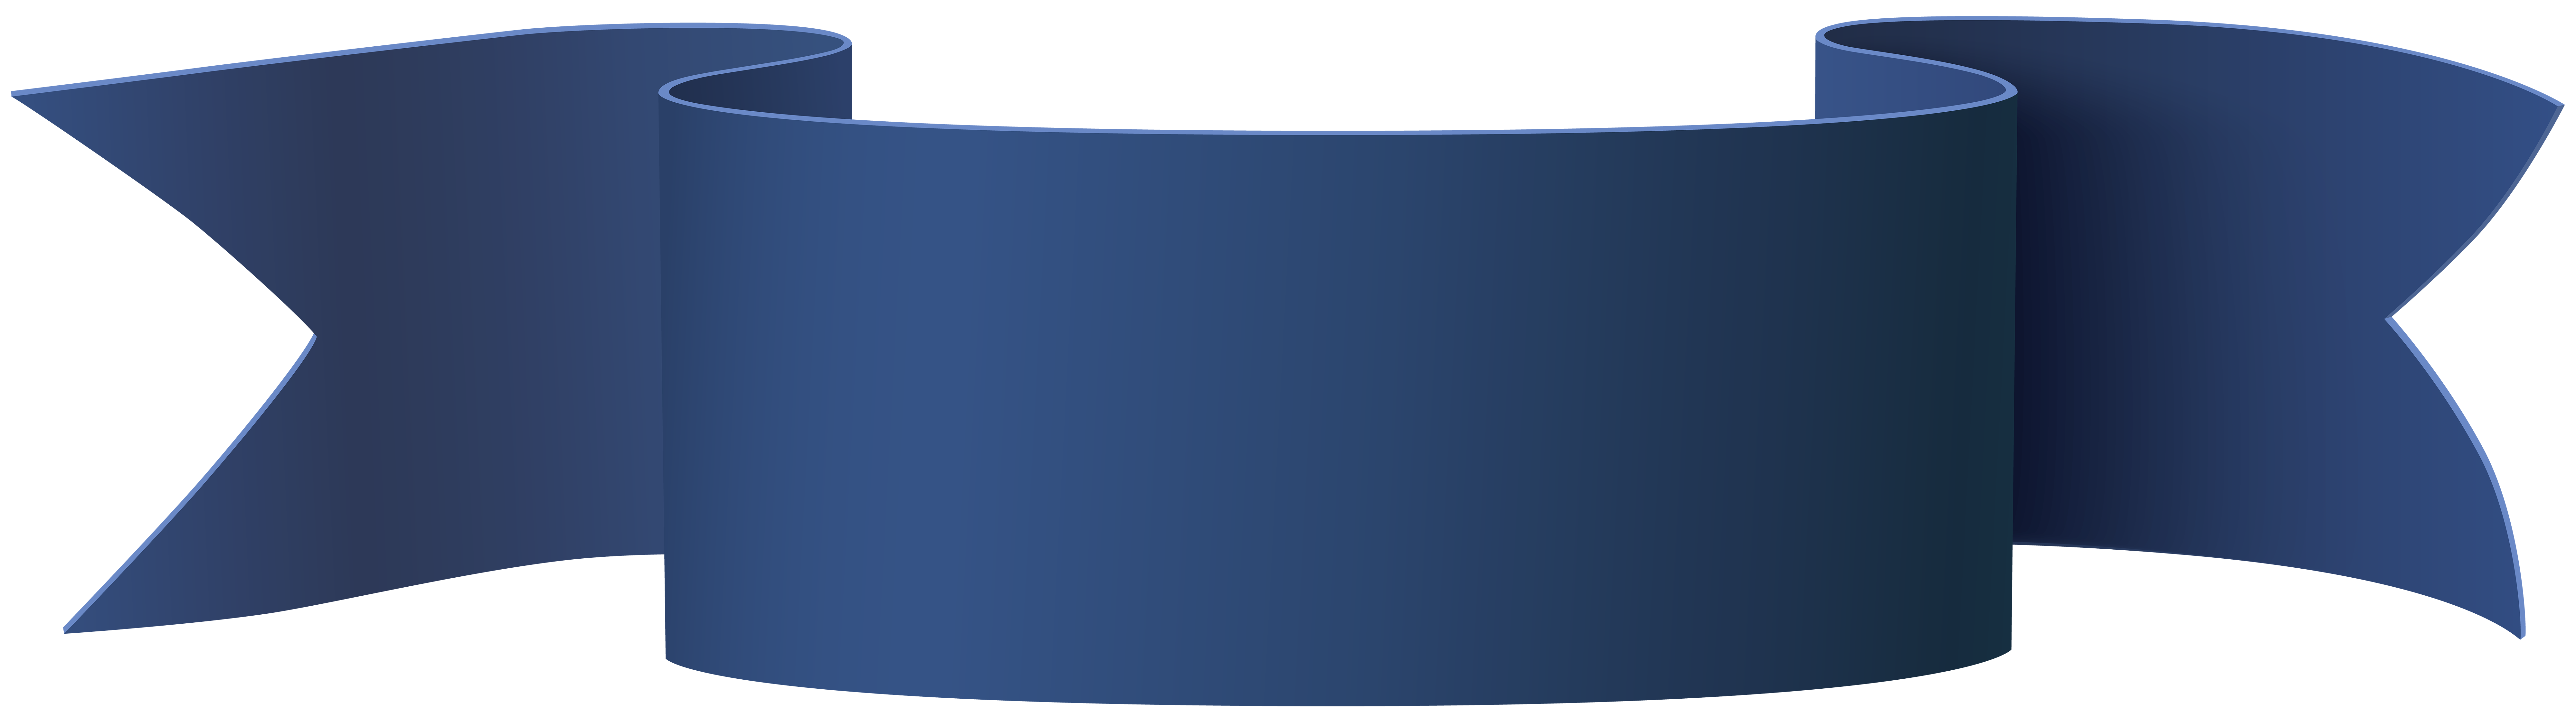 Banner blue png.